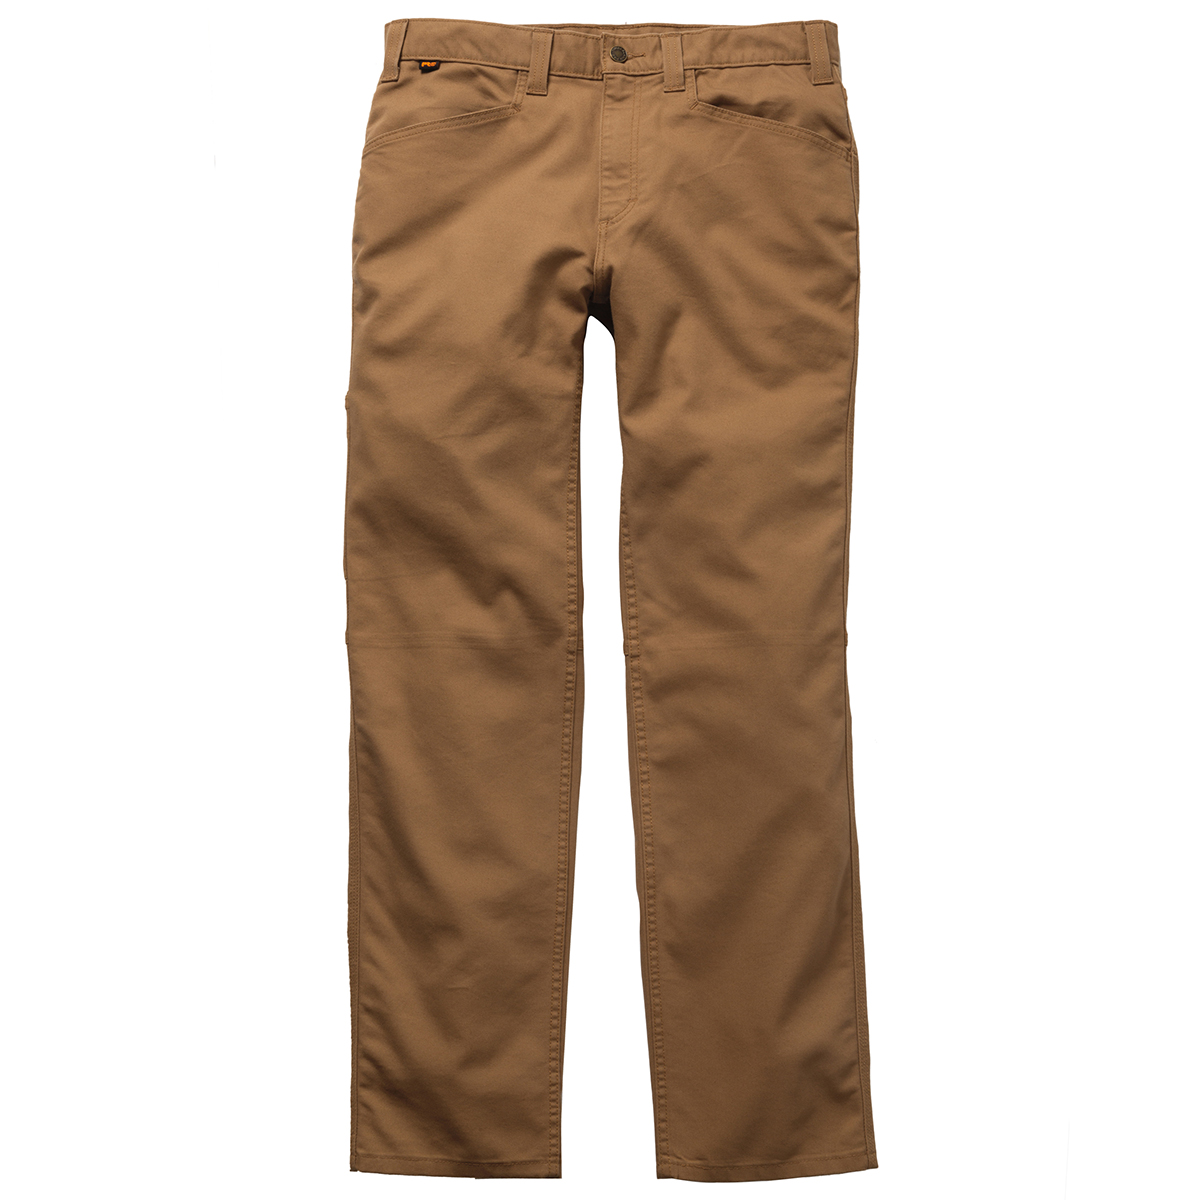 Timberland Pro Men’s 8 Series Utility Work Pants